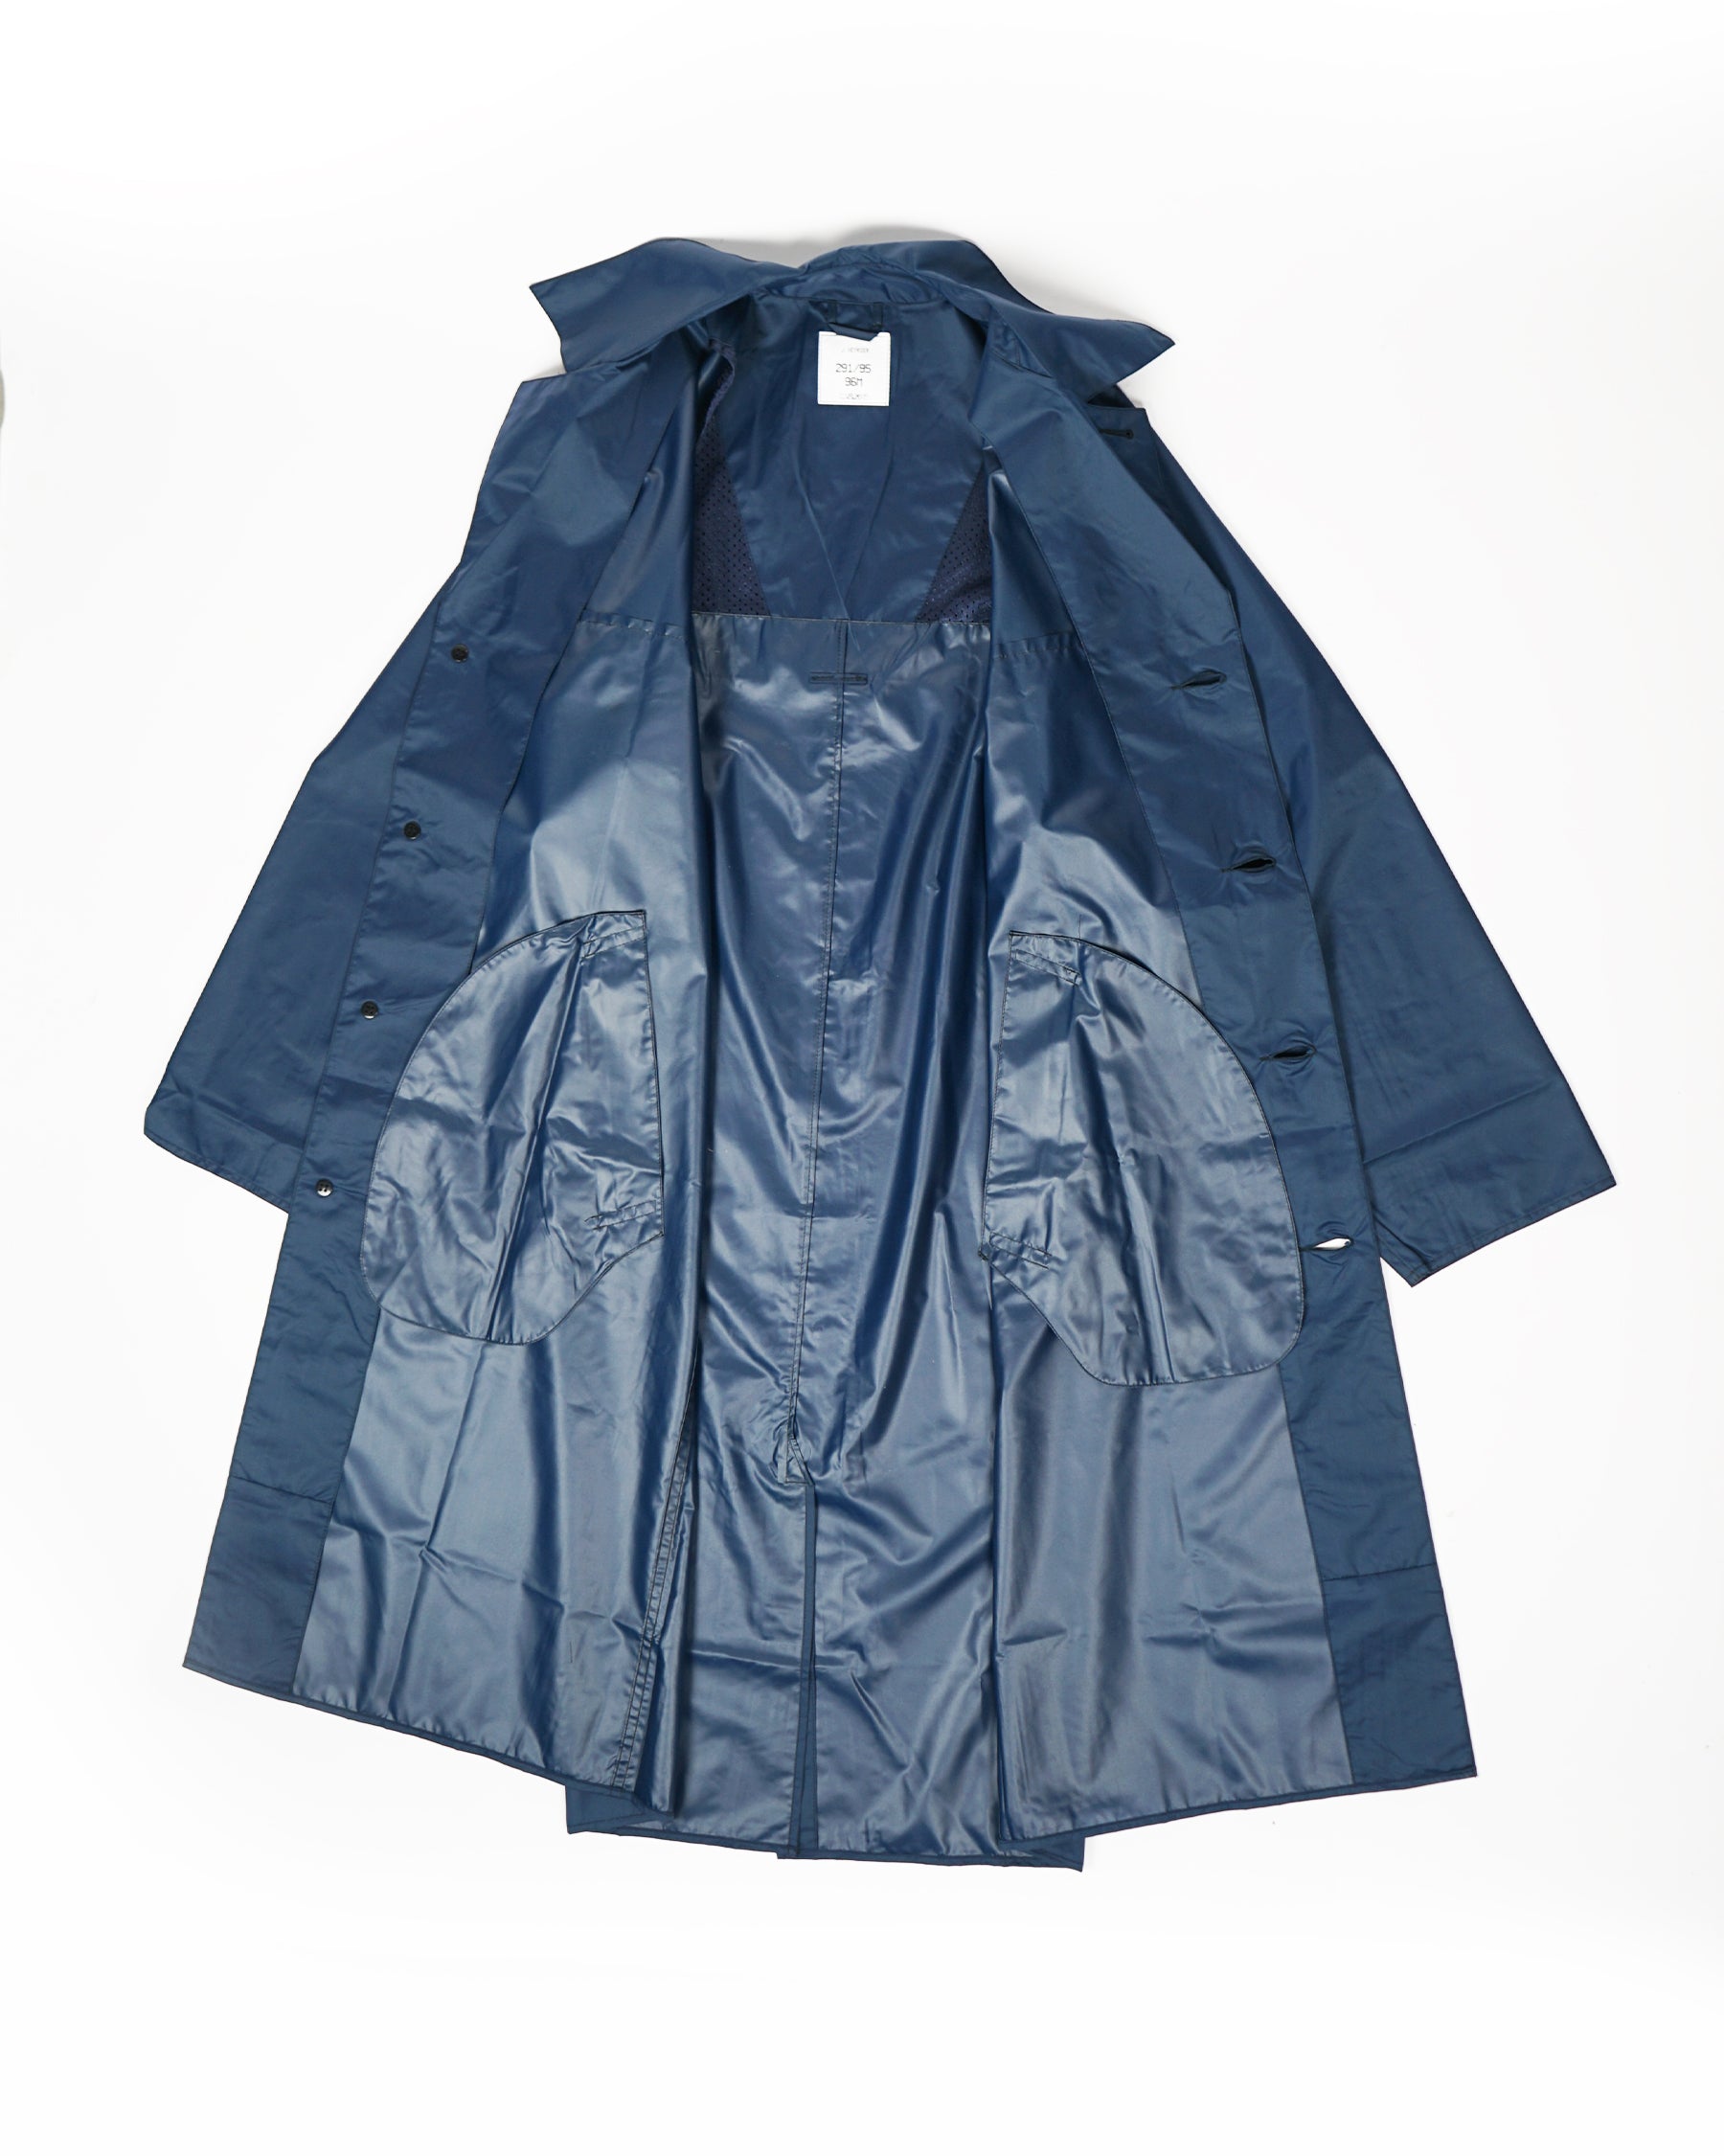 French Raincoat